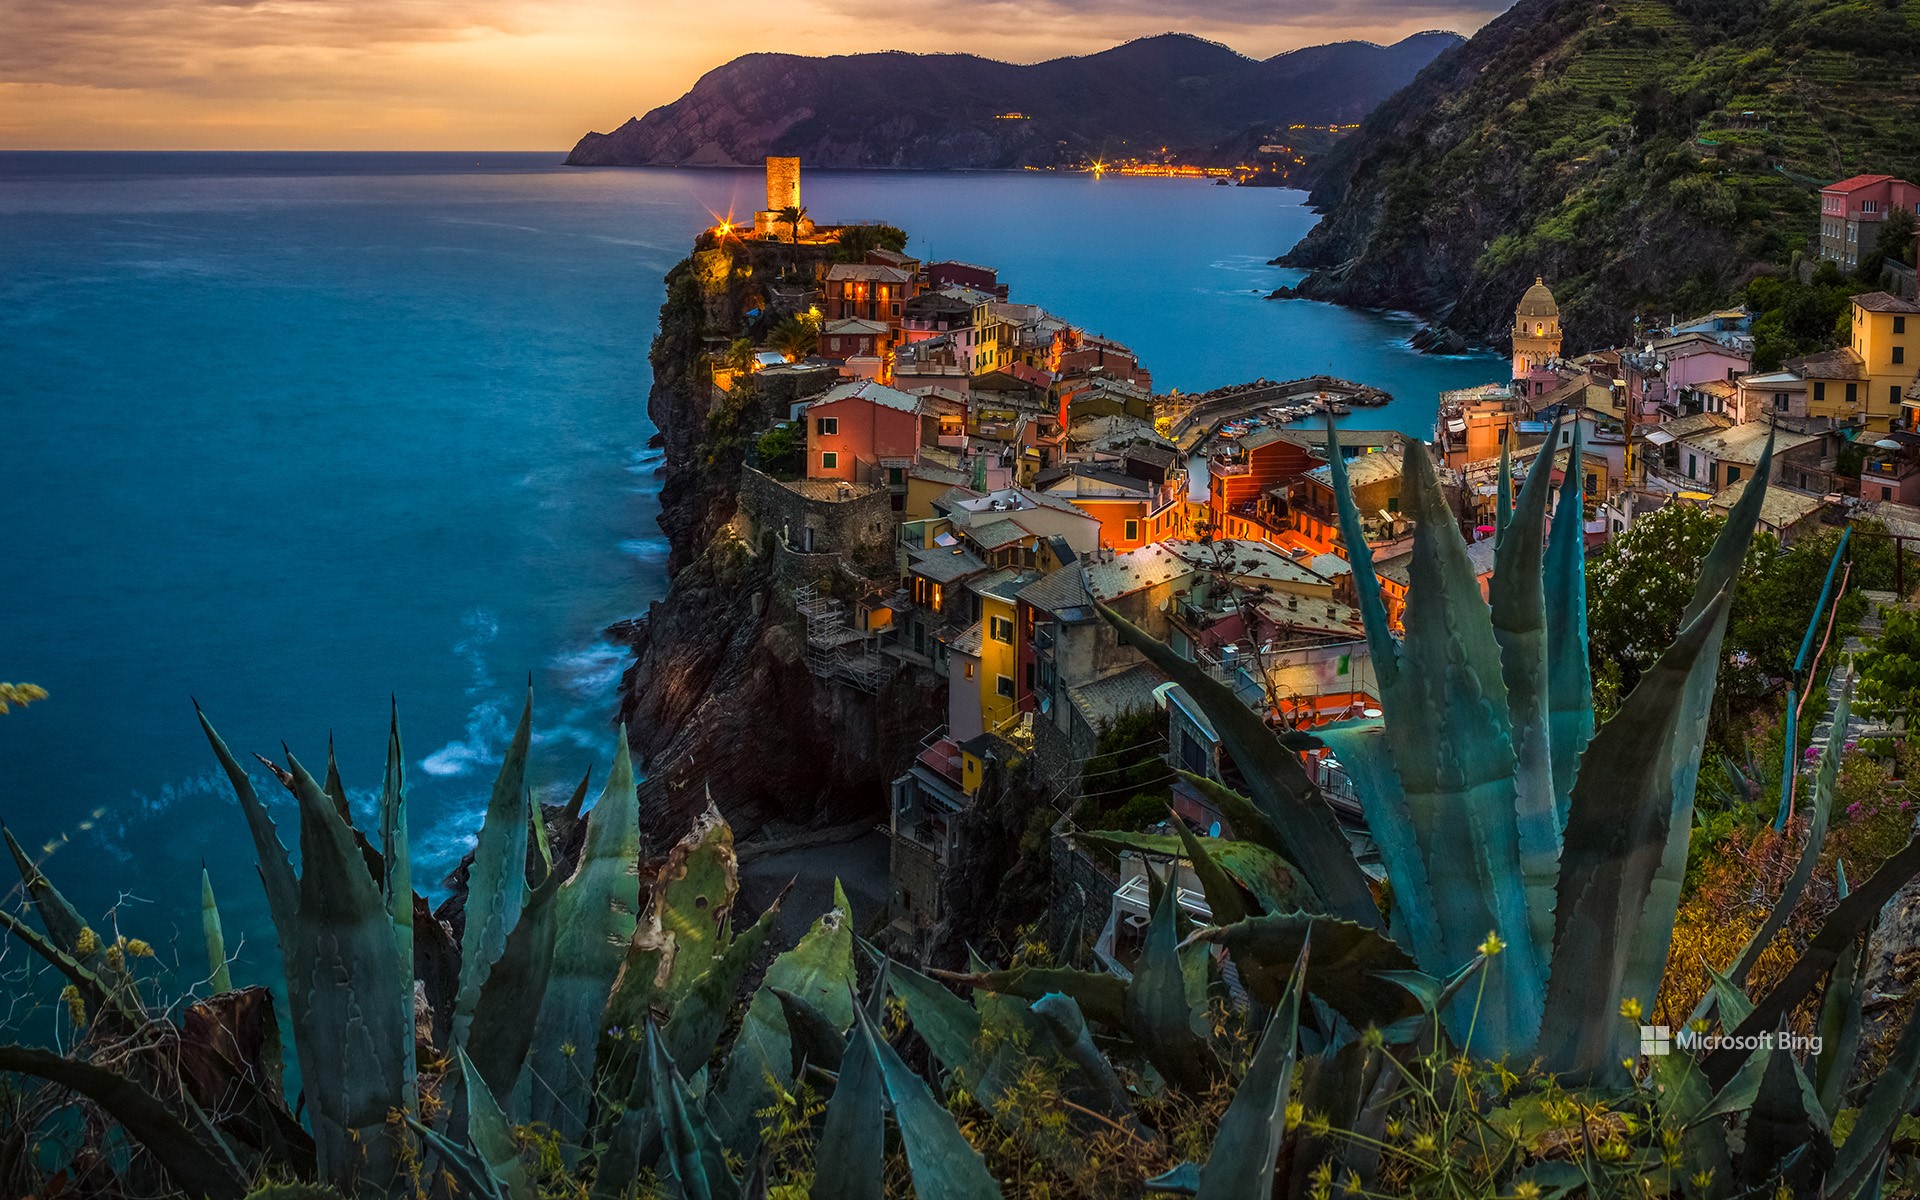 Vernazza in the Cinque Terre region of Italy